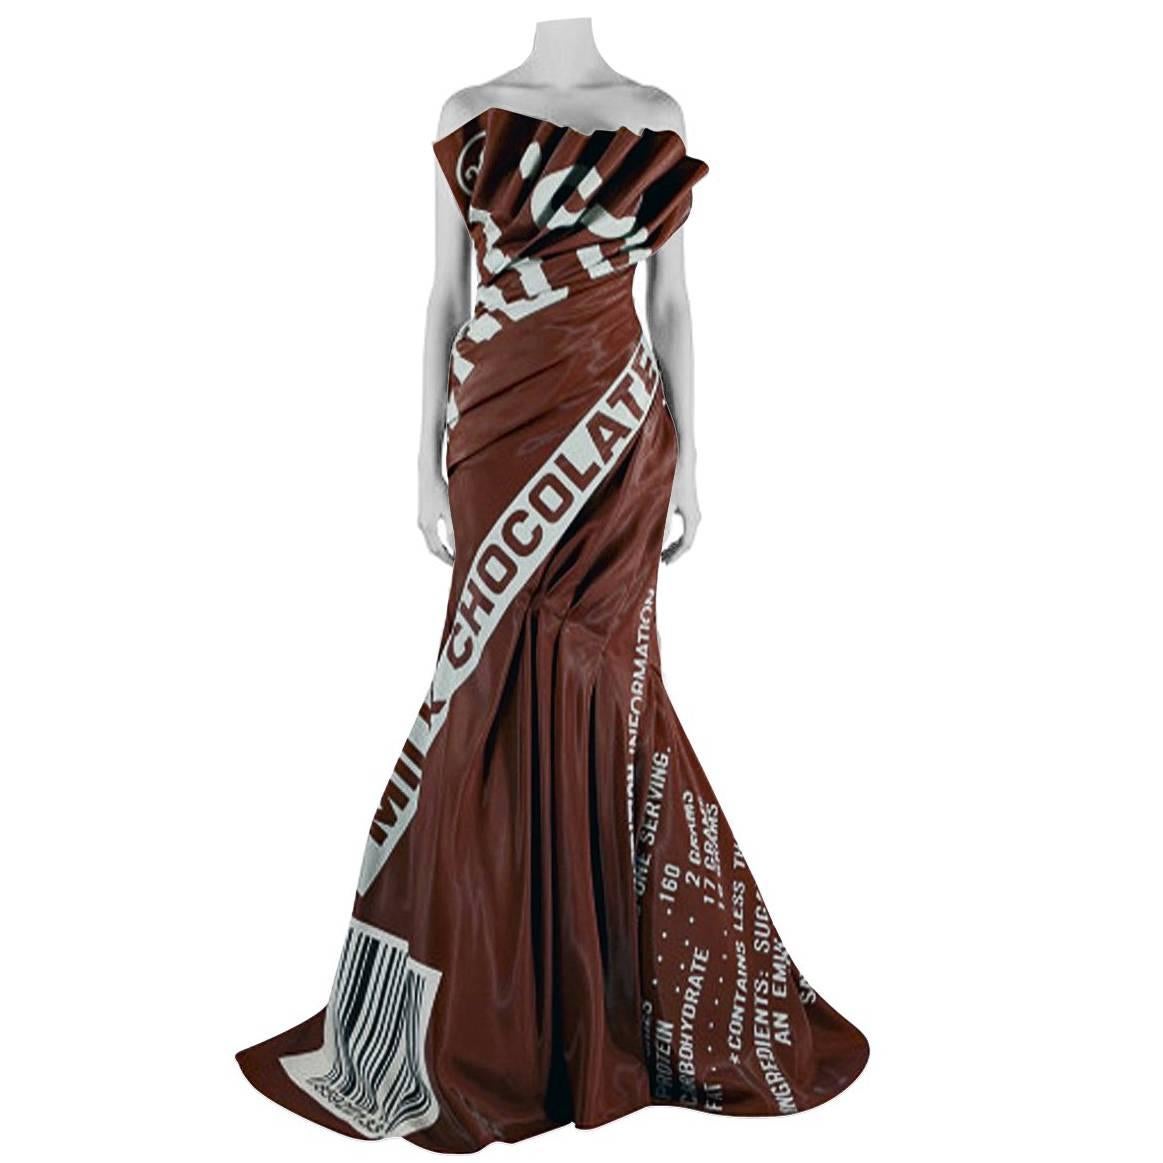 Moschino Couture Hershey Chocolate Bar Runway Gown   New